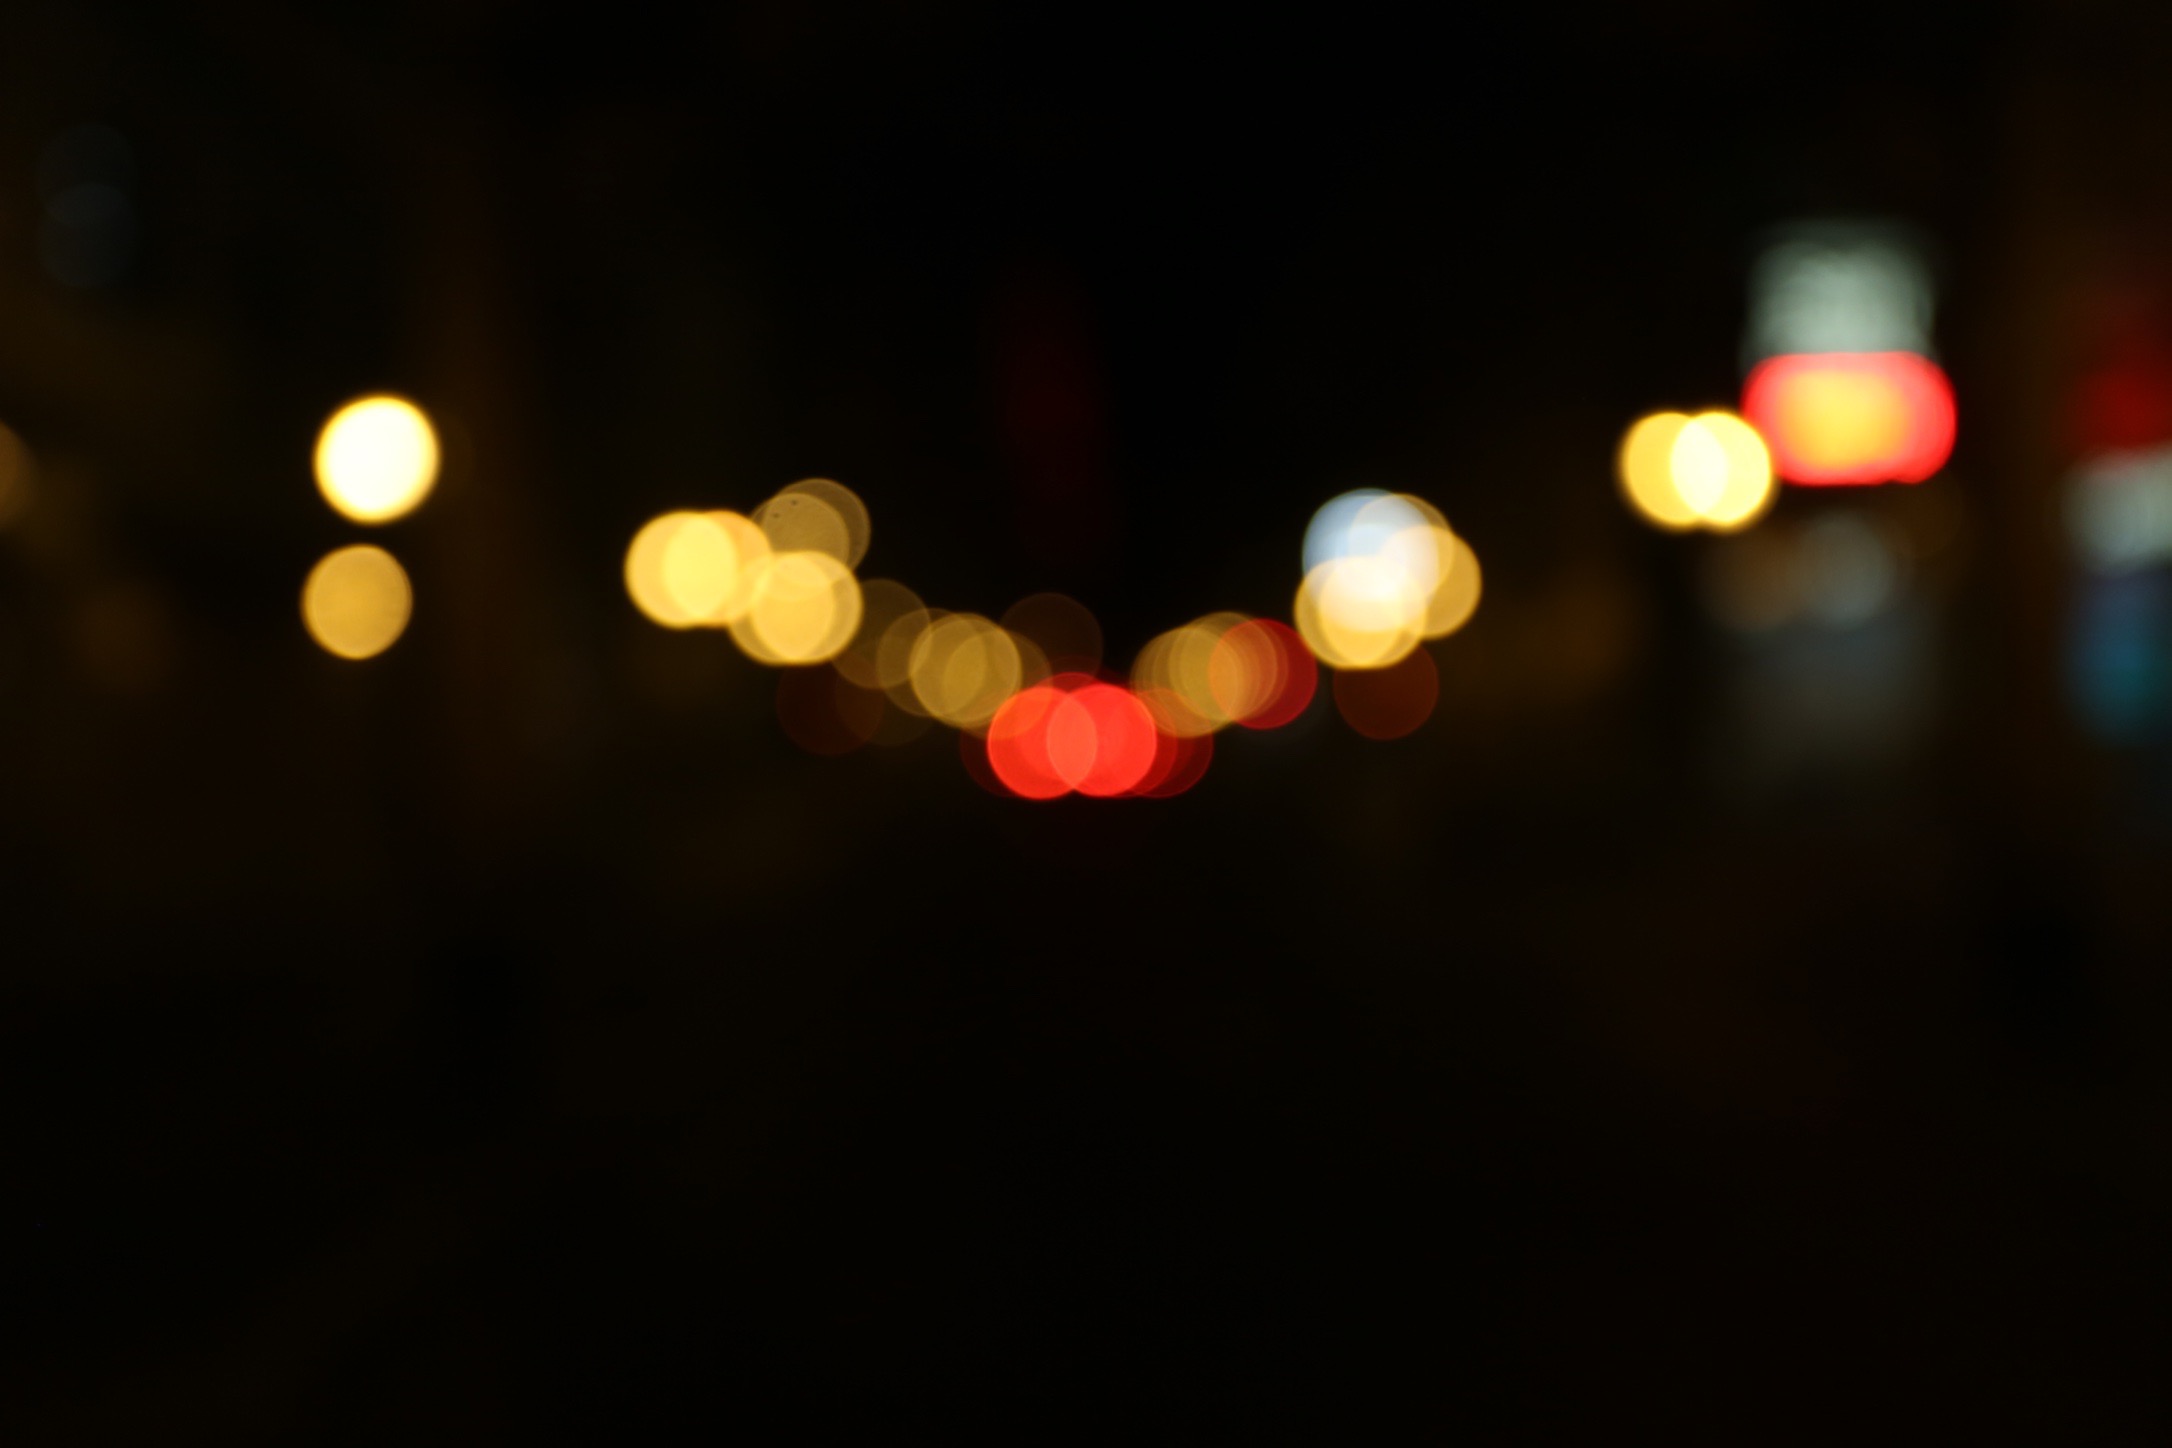 Blurred lights in the dark.